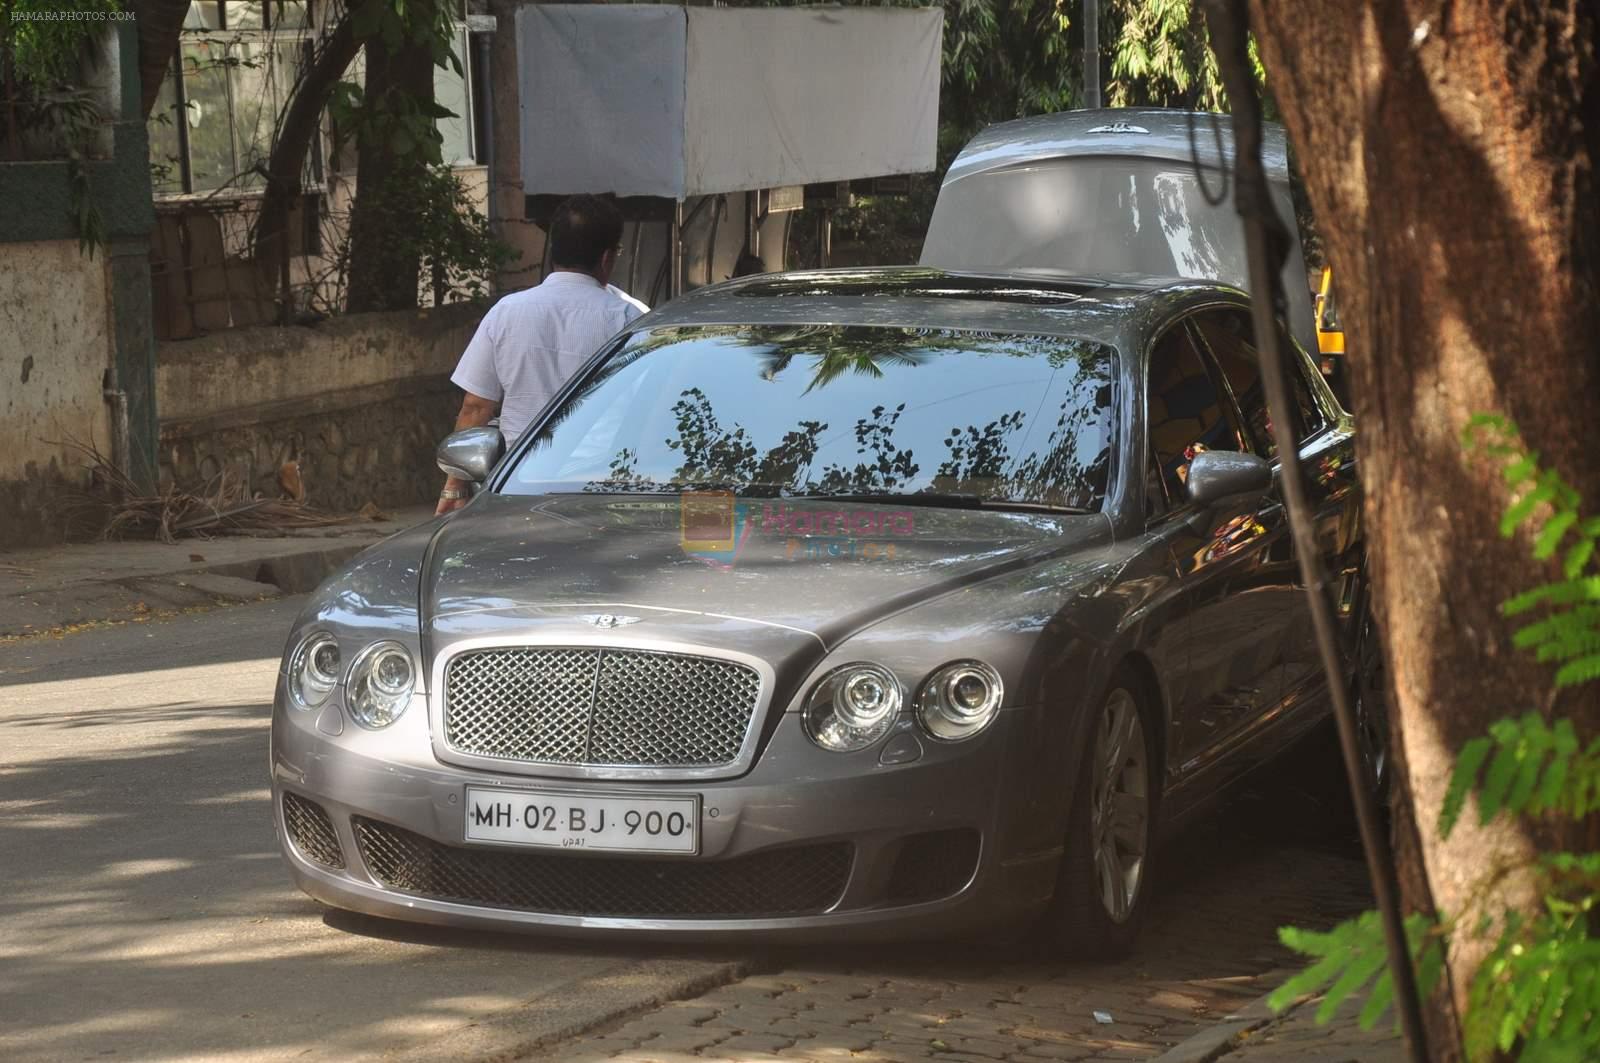 Akshay Kumar's car breaks down in Bandra, Mumbai on 15th May 2015